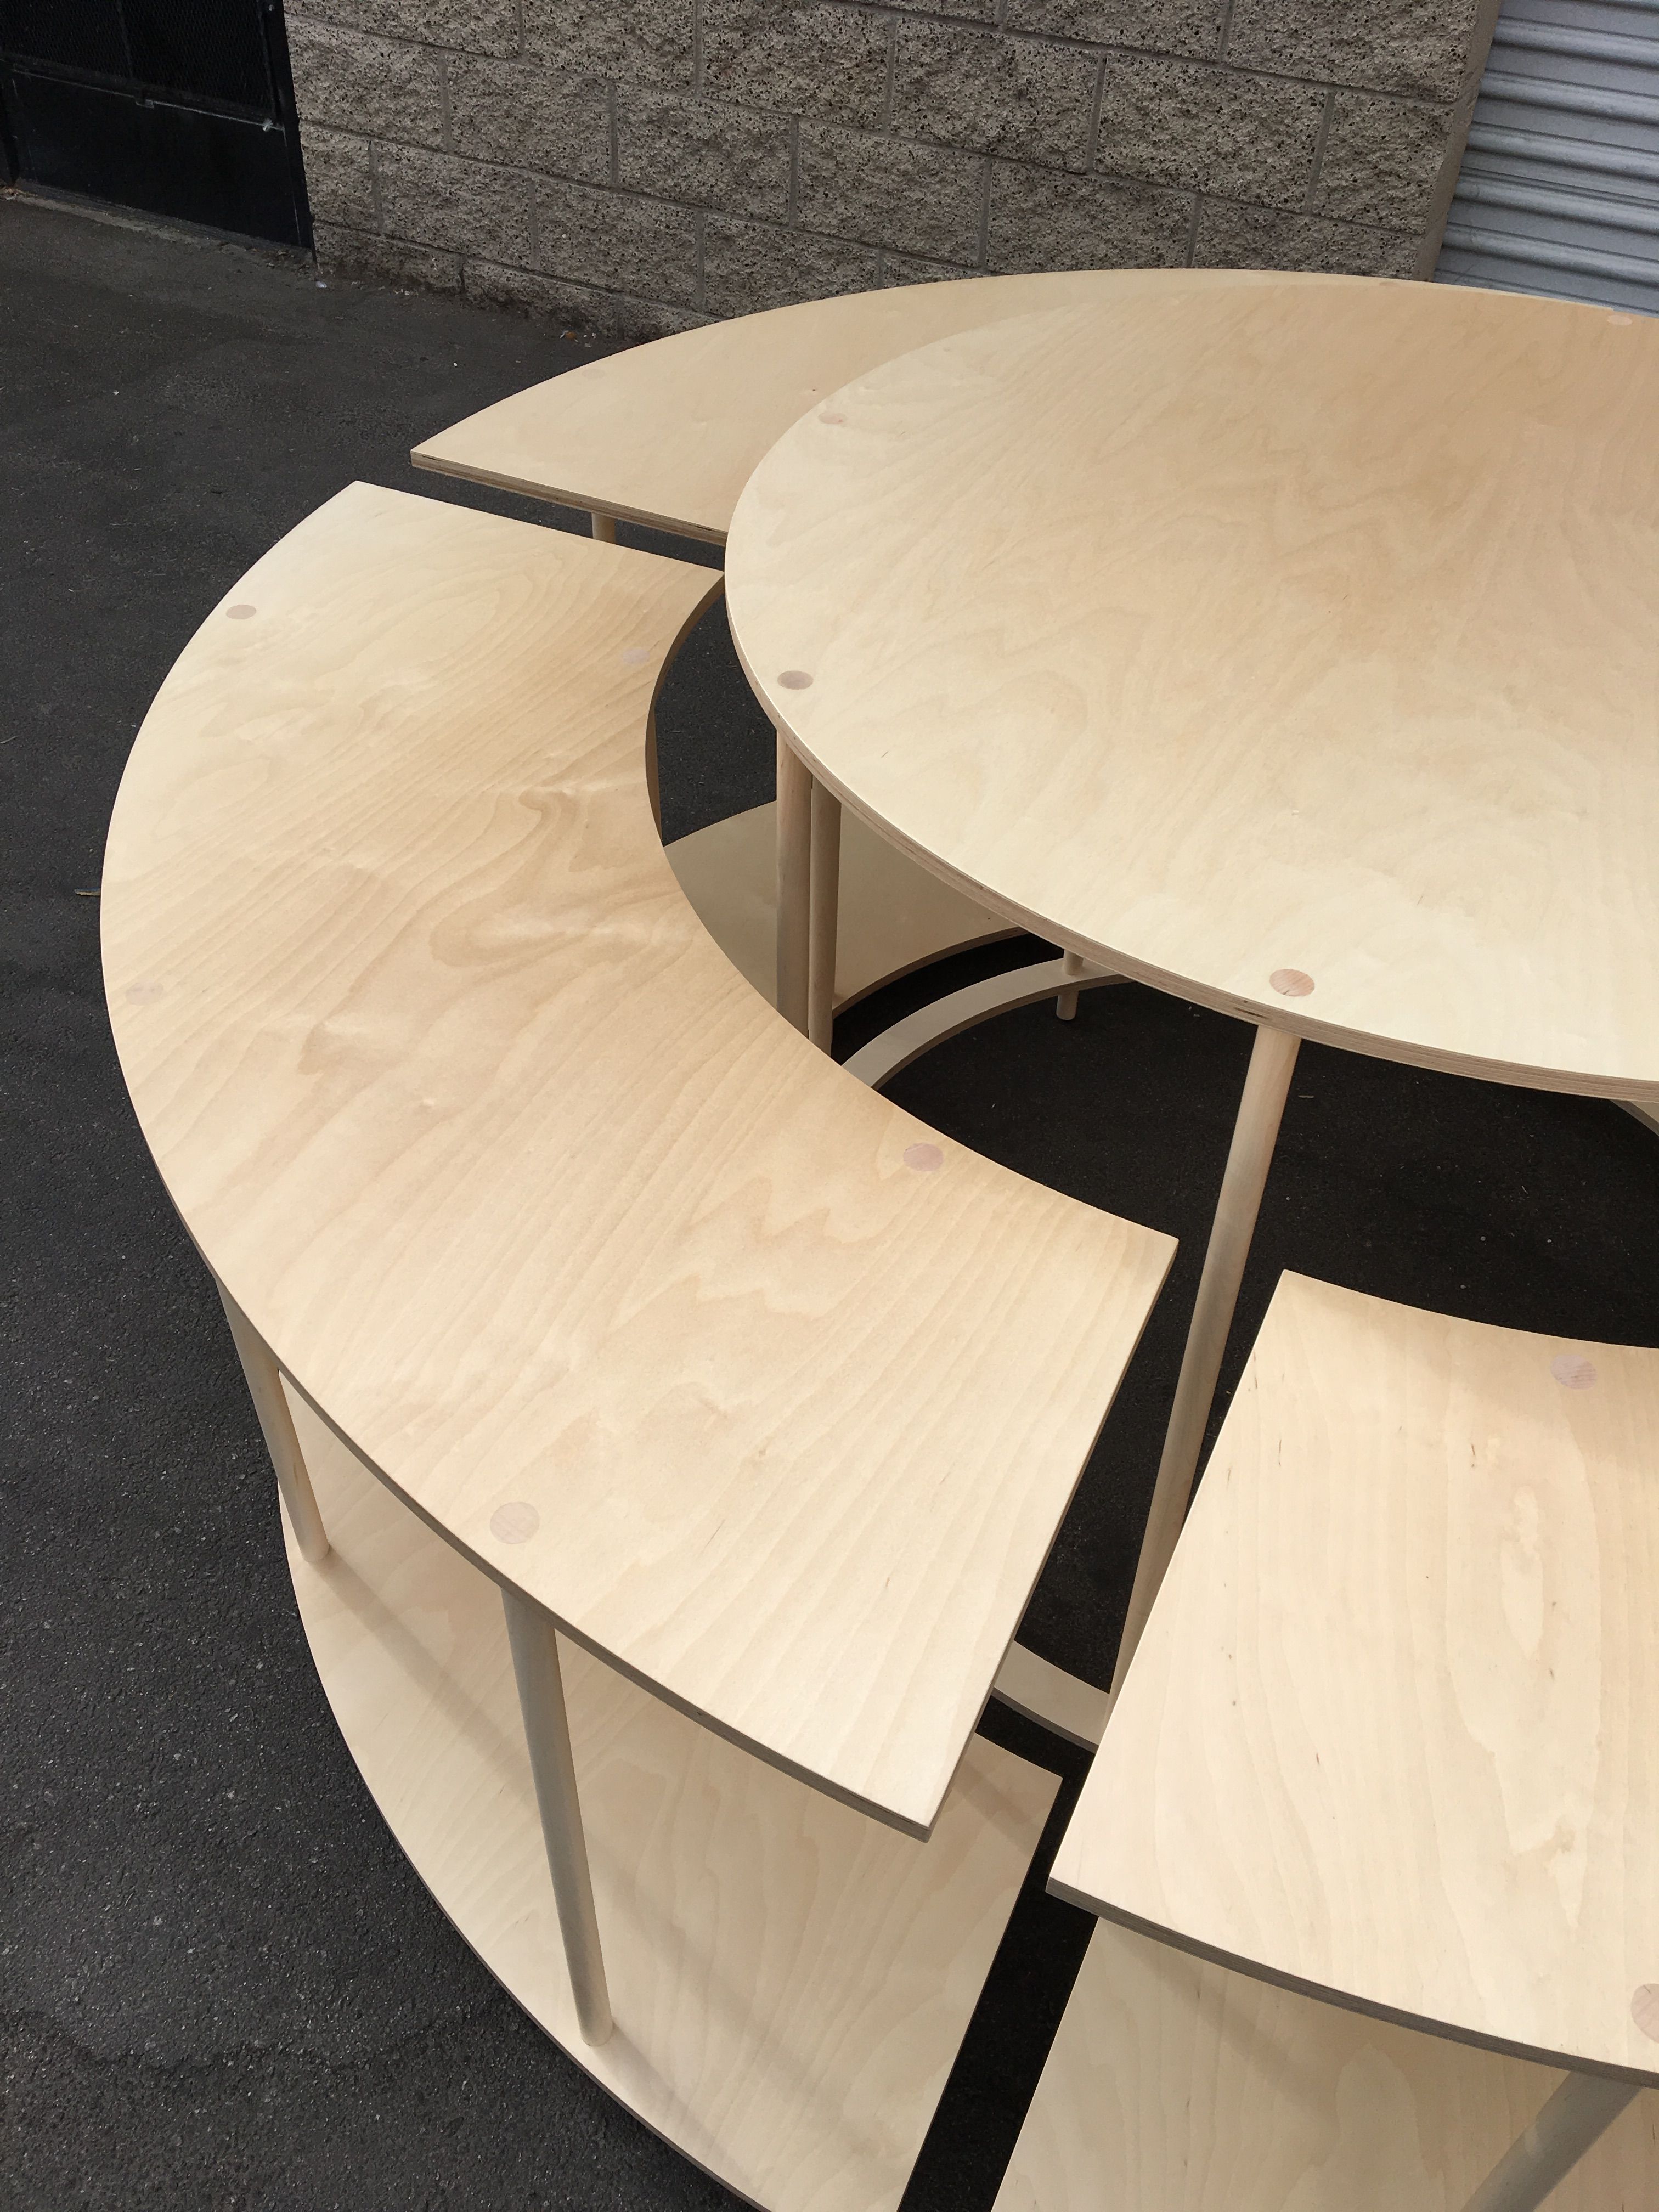  Display Table - Owl Bureau x Adidas / Abbott Kinney Festival product image 4